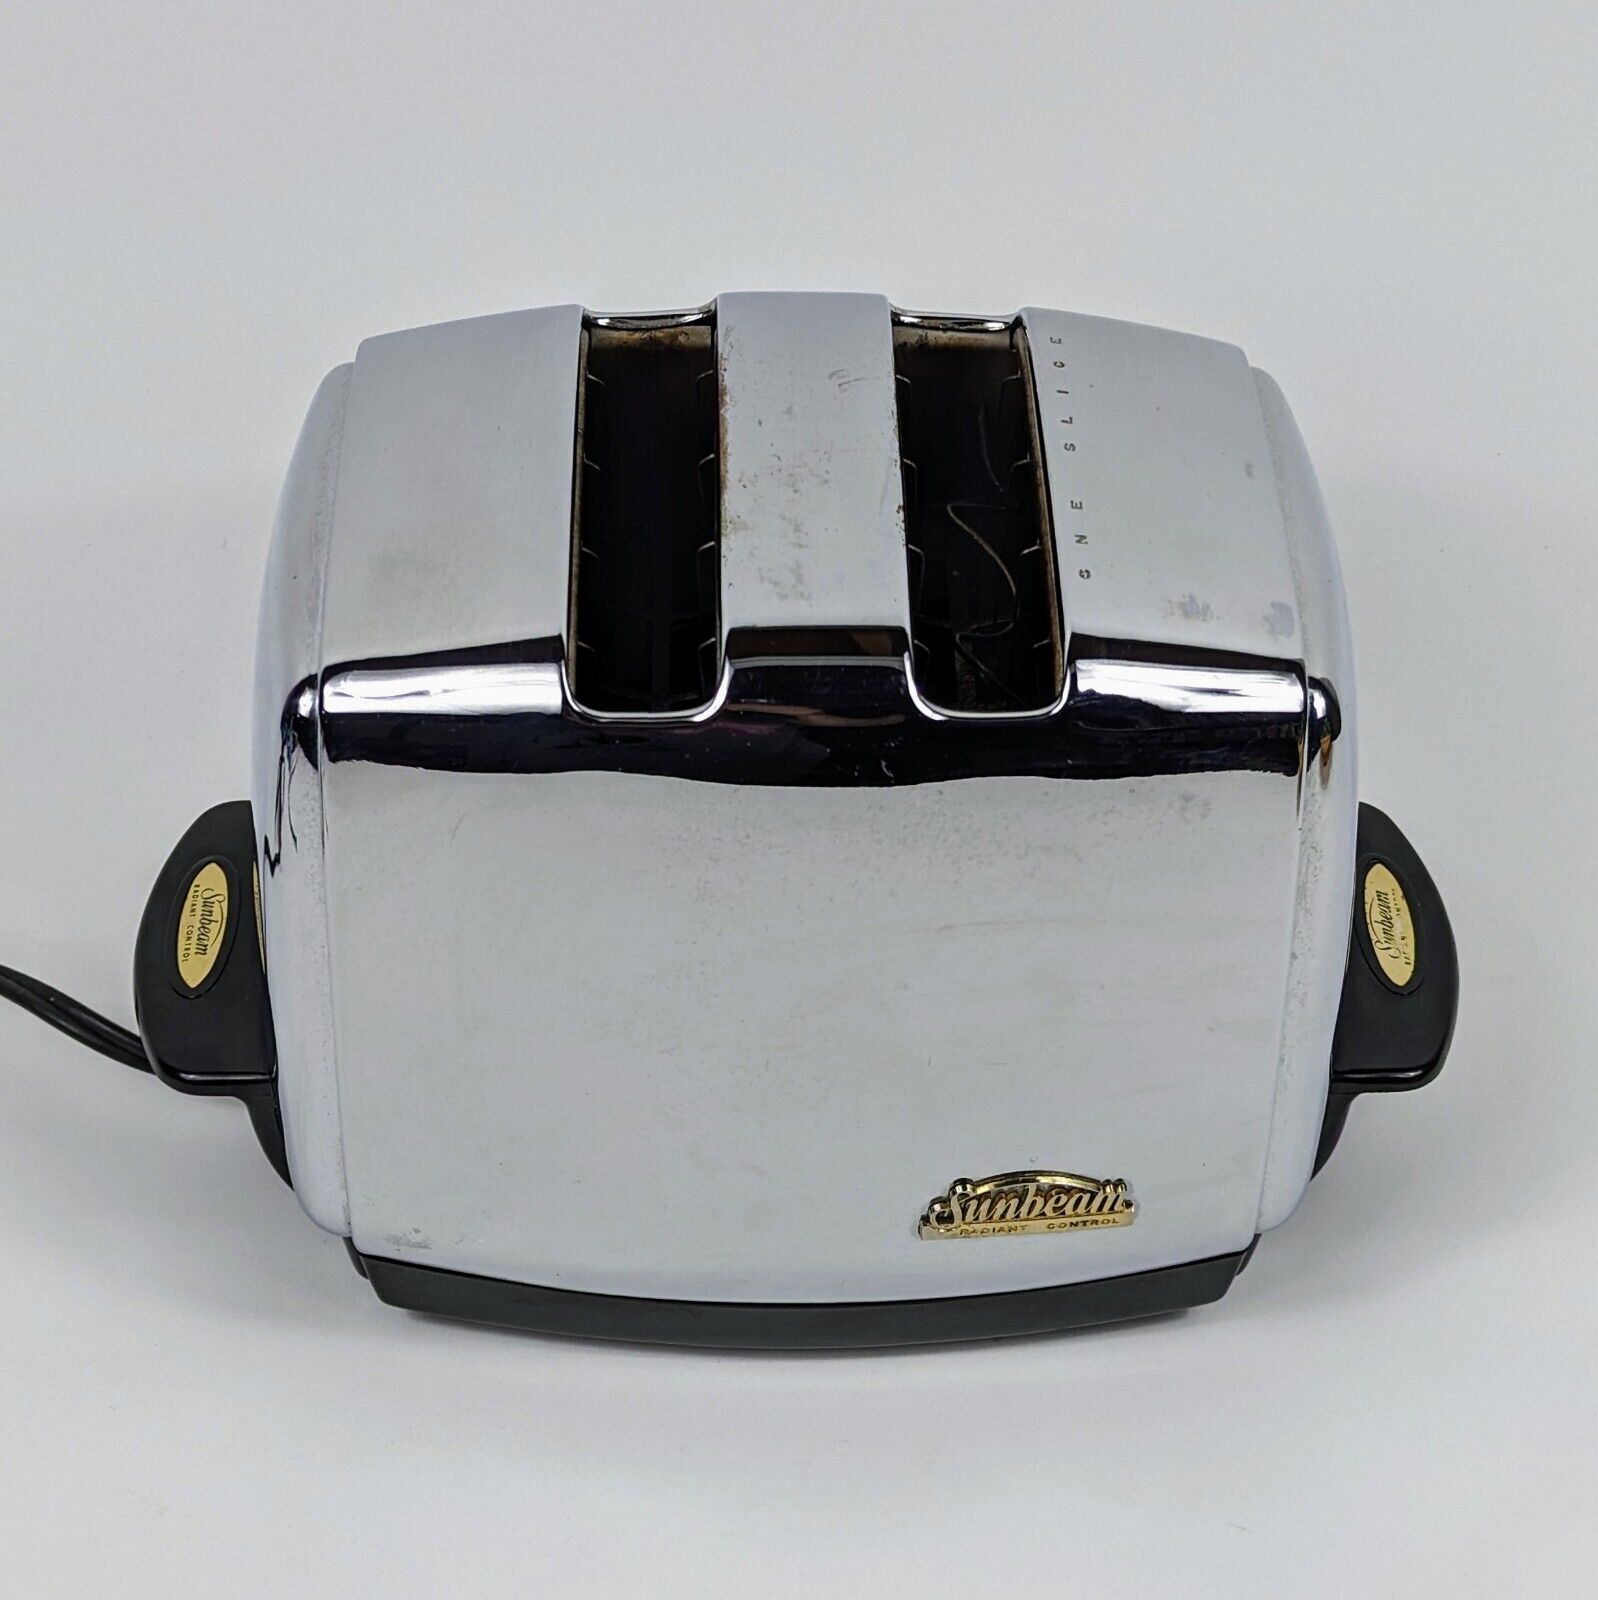 Vintage 1960 SUNBEAM Radiant Control Toaster T-35 Works Great Beautiful Art Deco